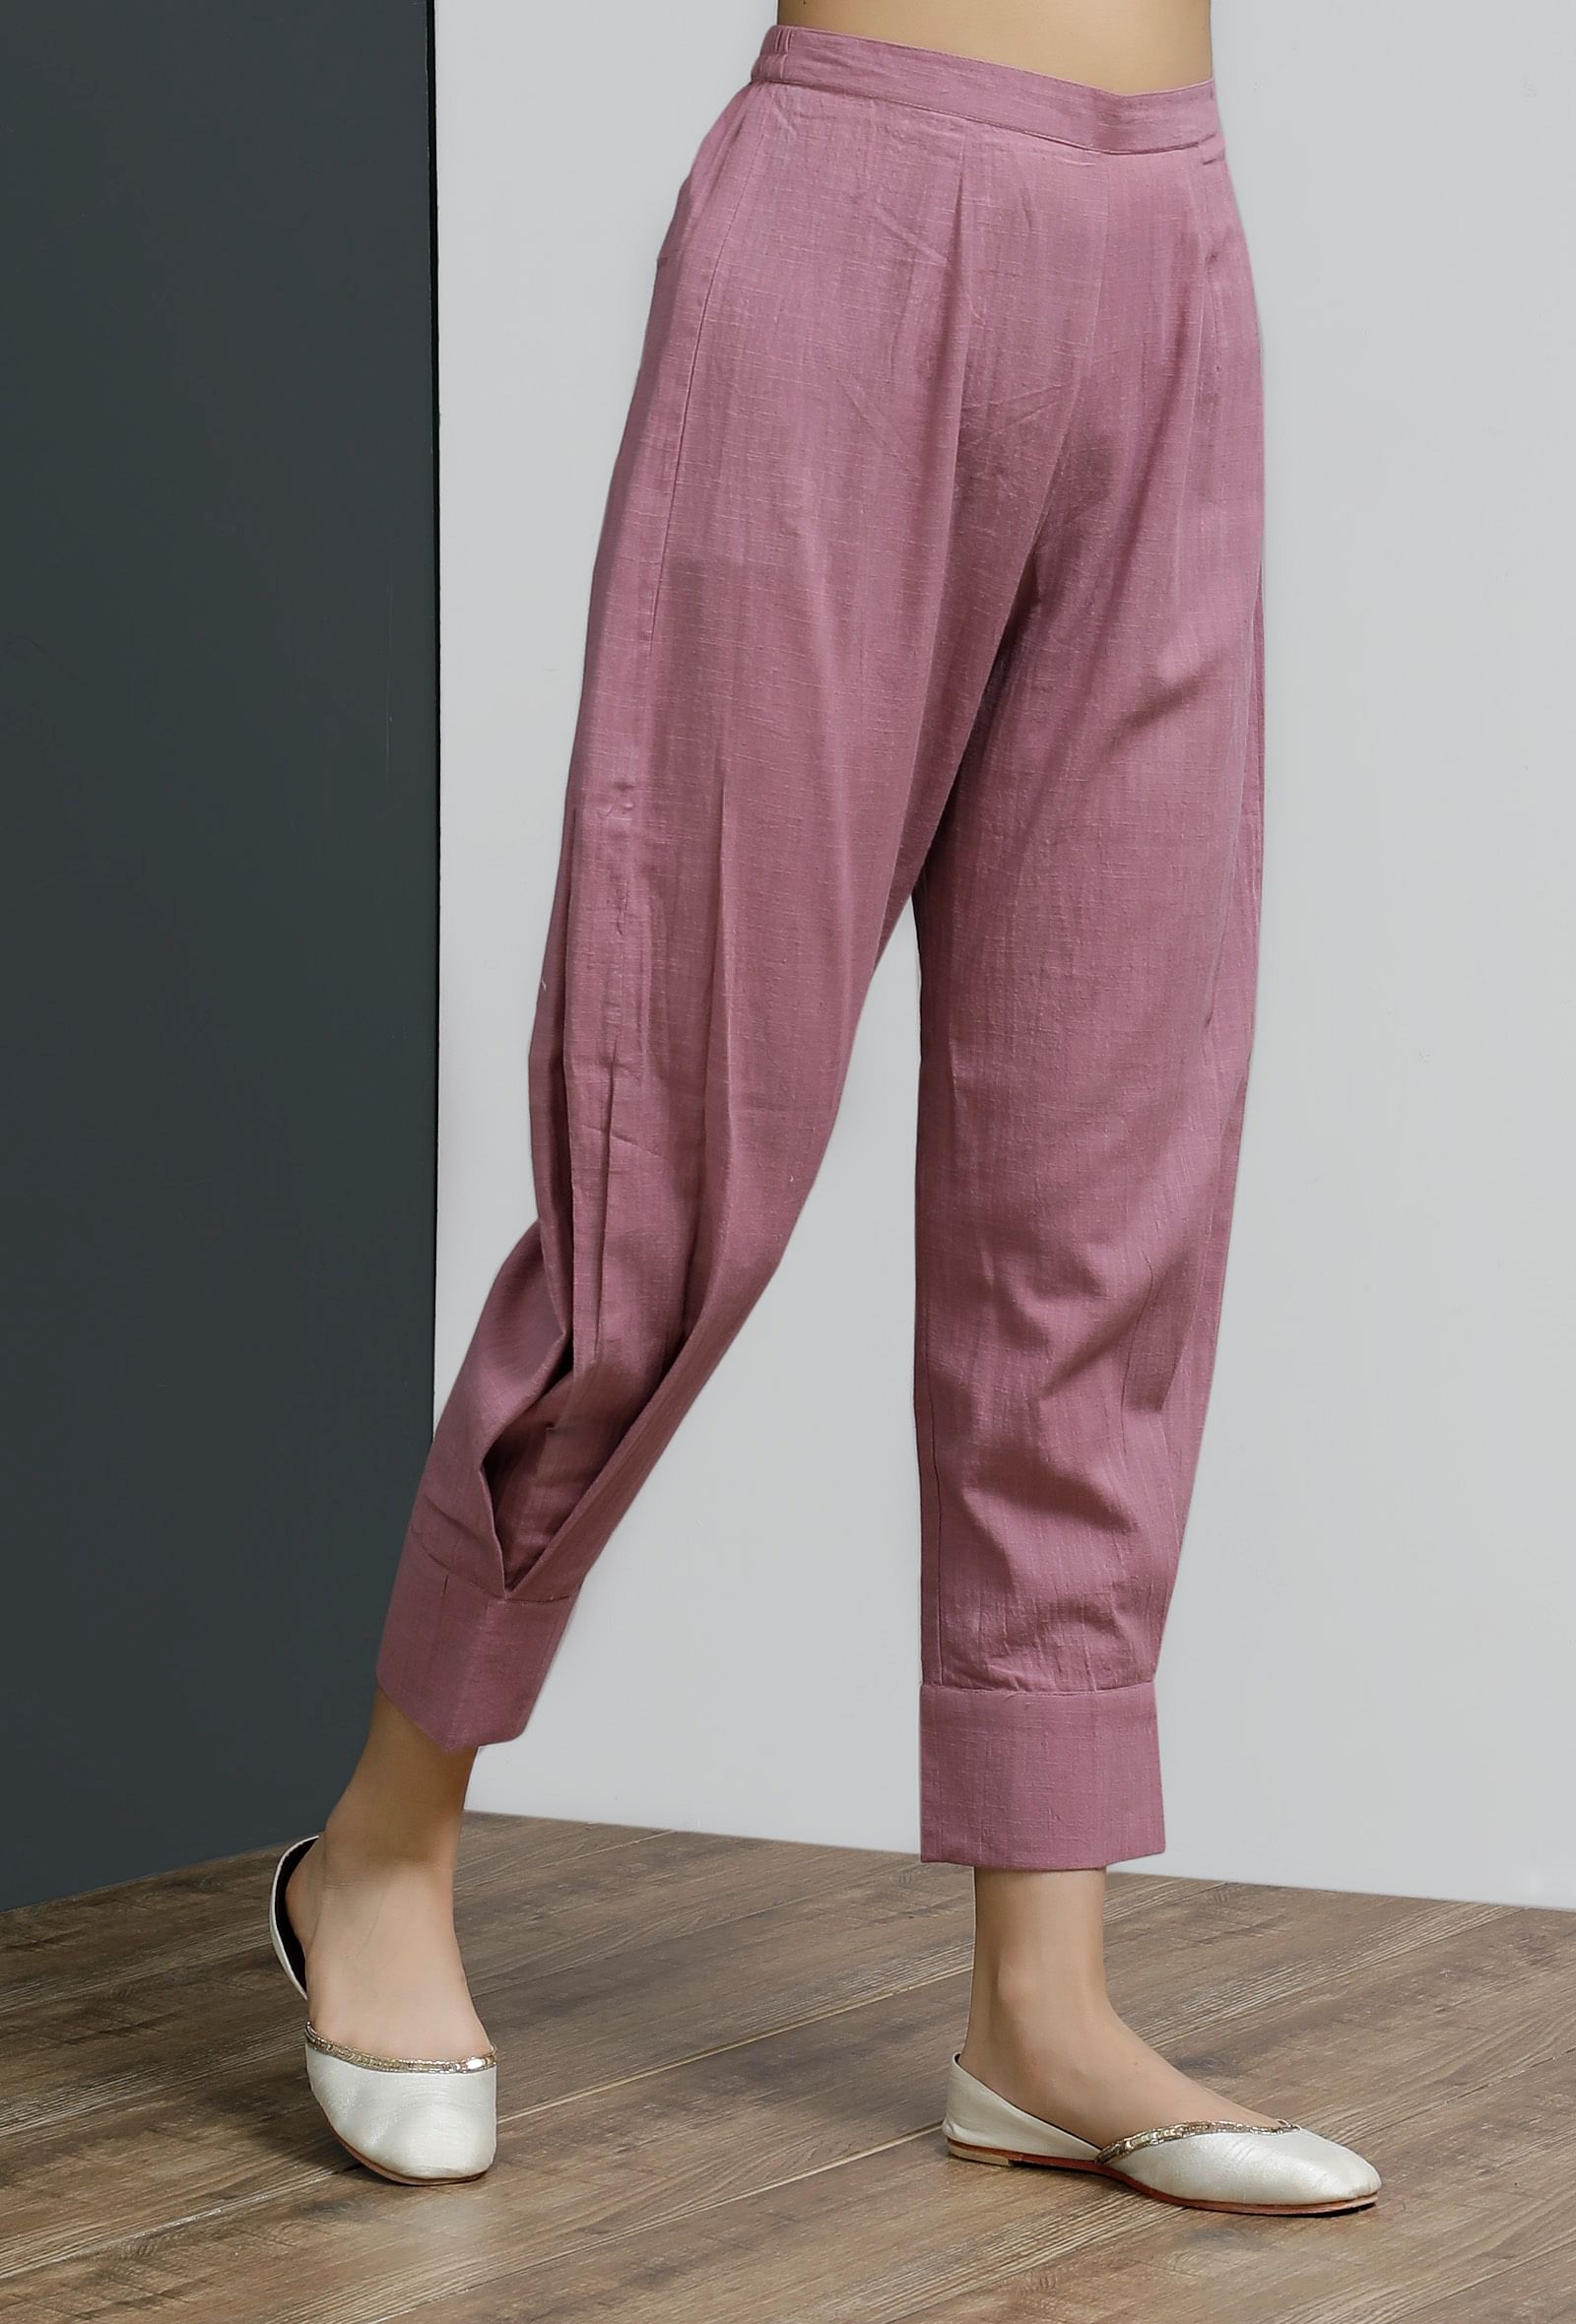 Buy Pink Kantha Work Cotton Kurta With Matching Pant And Dupatta Online |  Zuri